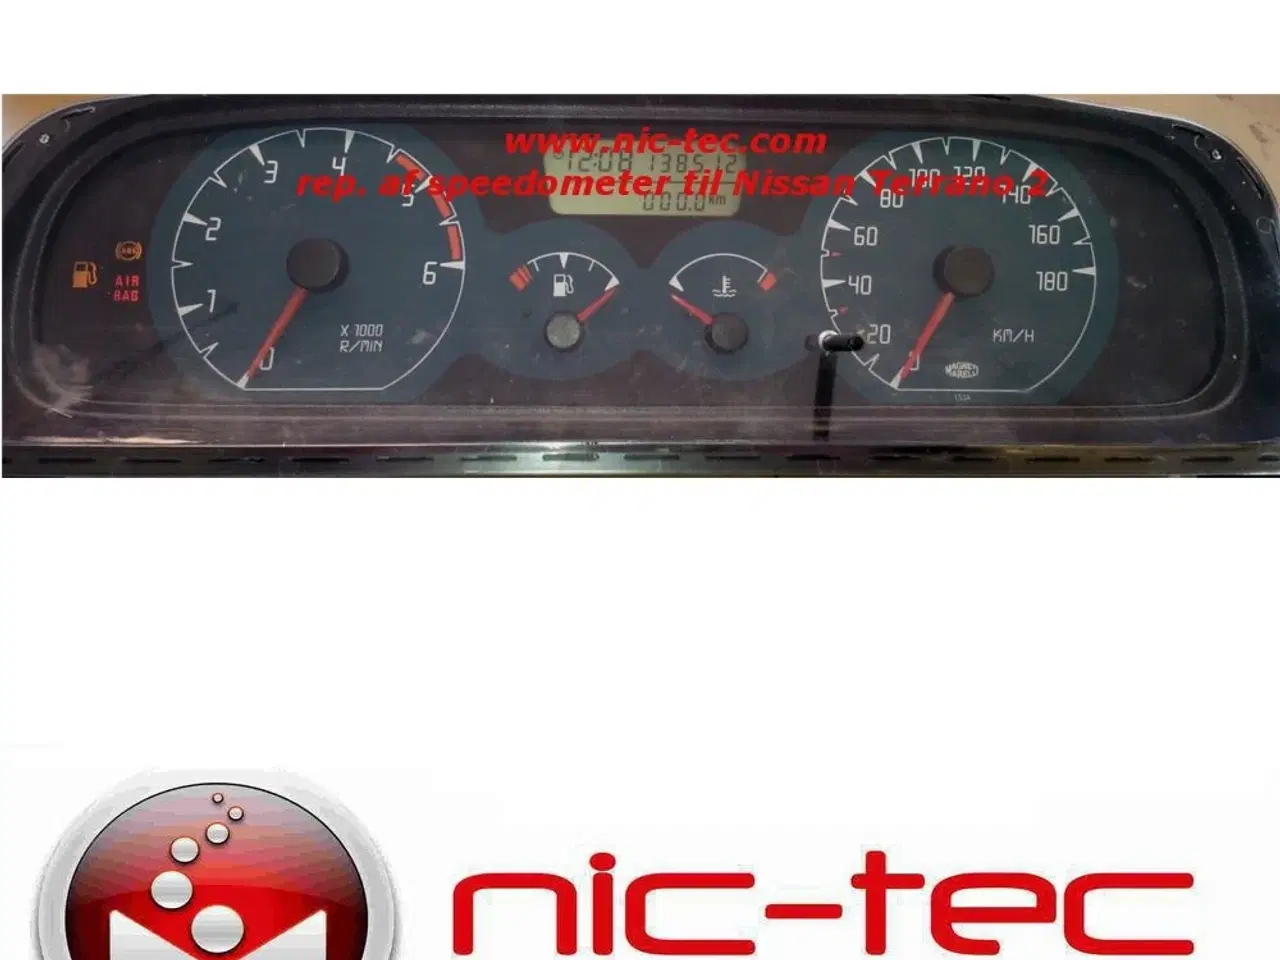 Billede 1 - Nissan Terrano 2 speedometer reperation / kombi Instrument reperation.